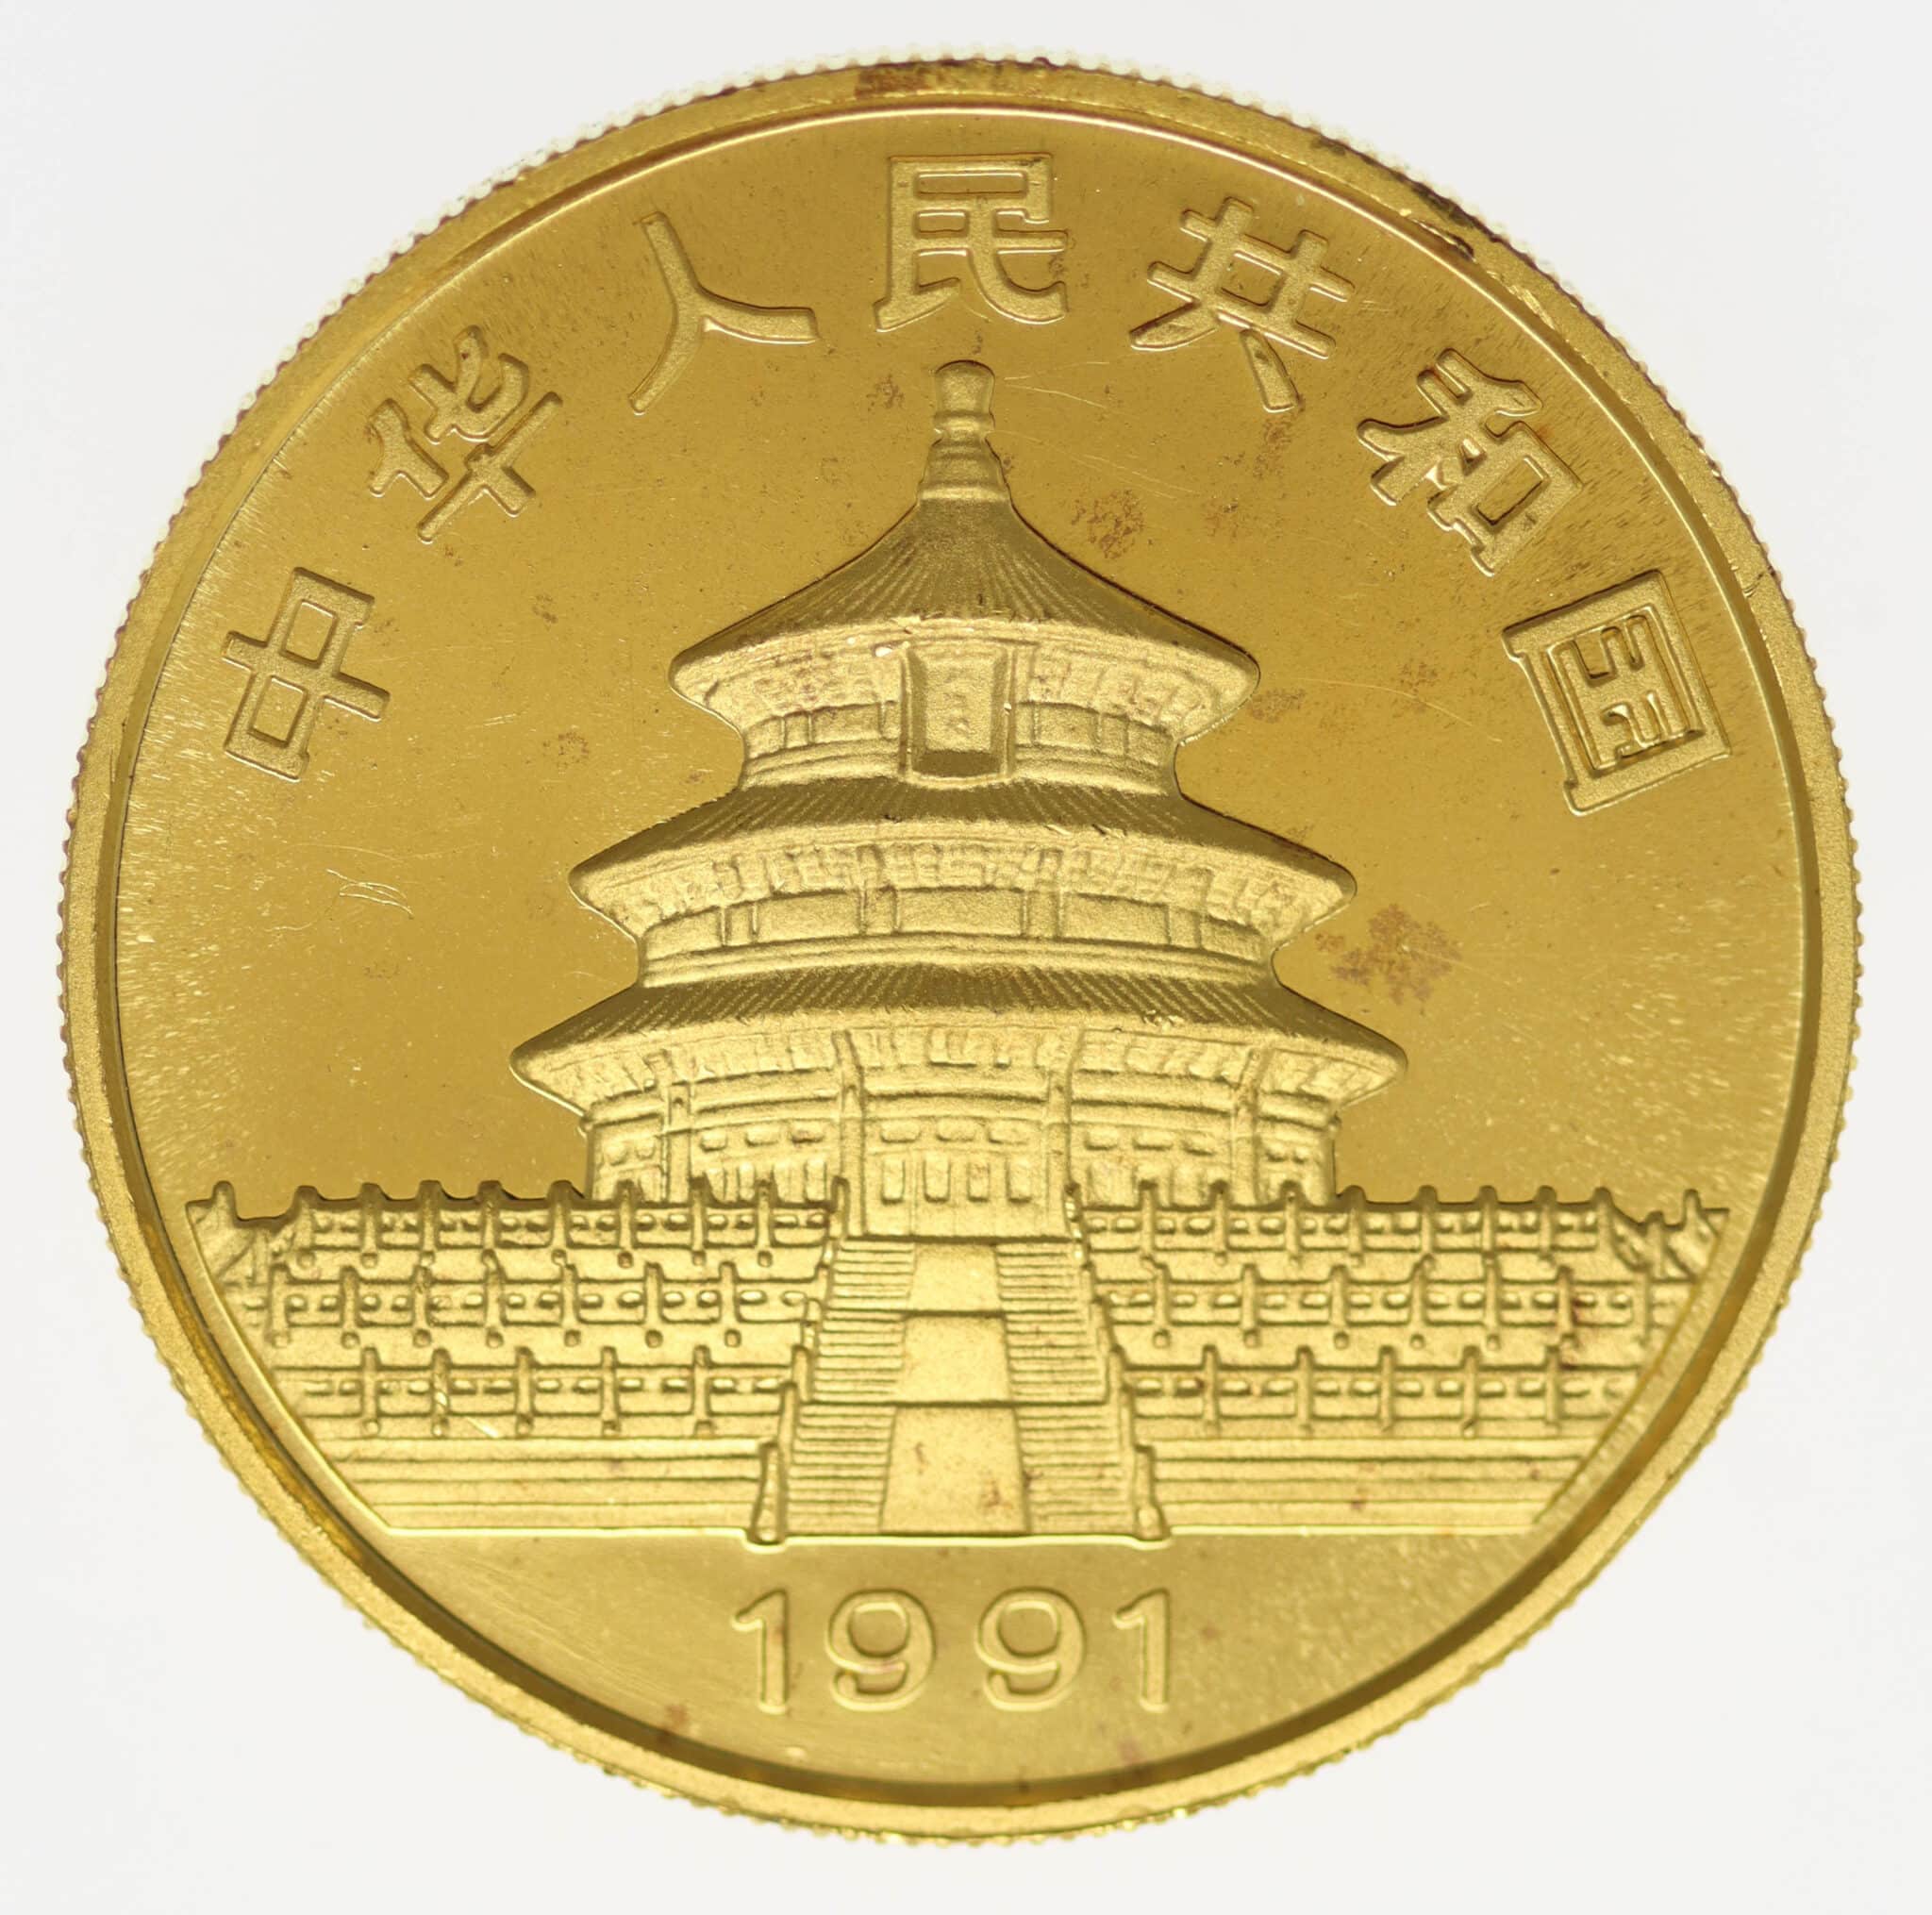 china-panda - Panda-Münzen: Der "Emerging Market" der Numismatik